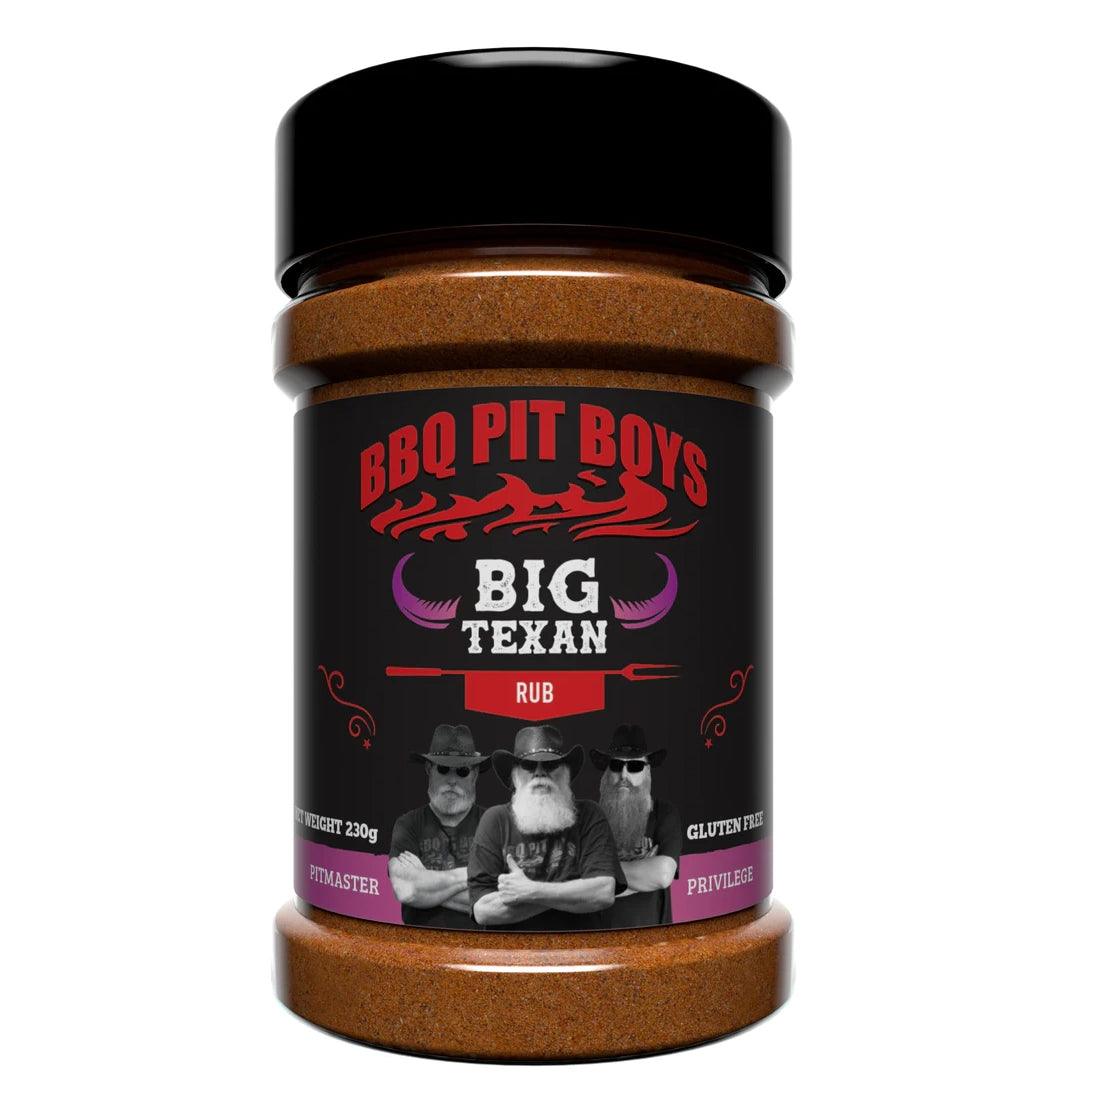 BBQ Pit Boys Big Texan Rub 230g - BBQ Land